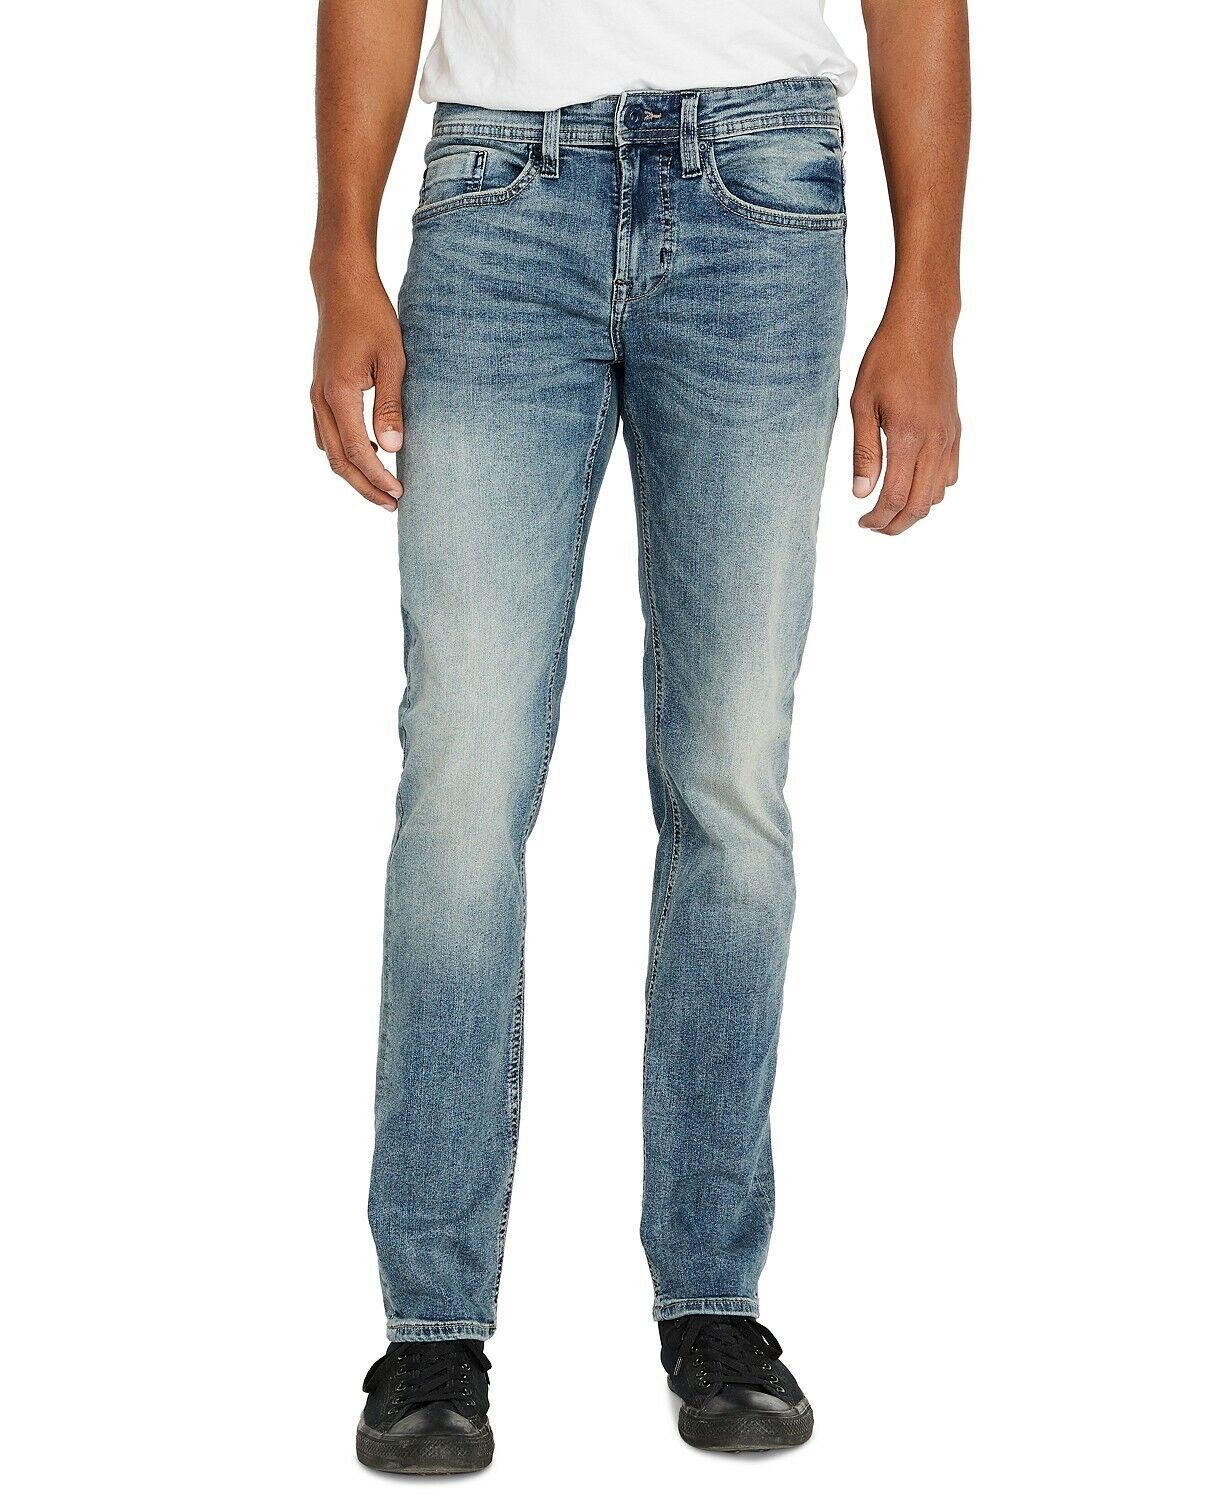 Wholesale Buffalo David Bitton Menapos;s Recommendation Slim Straight M Evan-x Jeans Fit